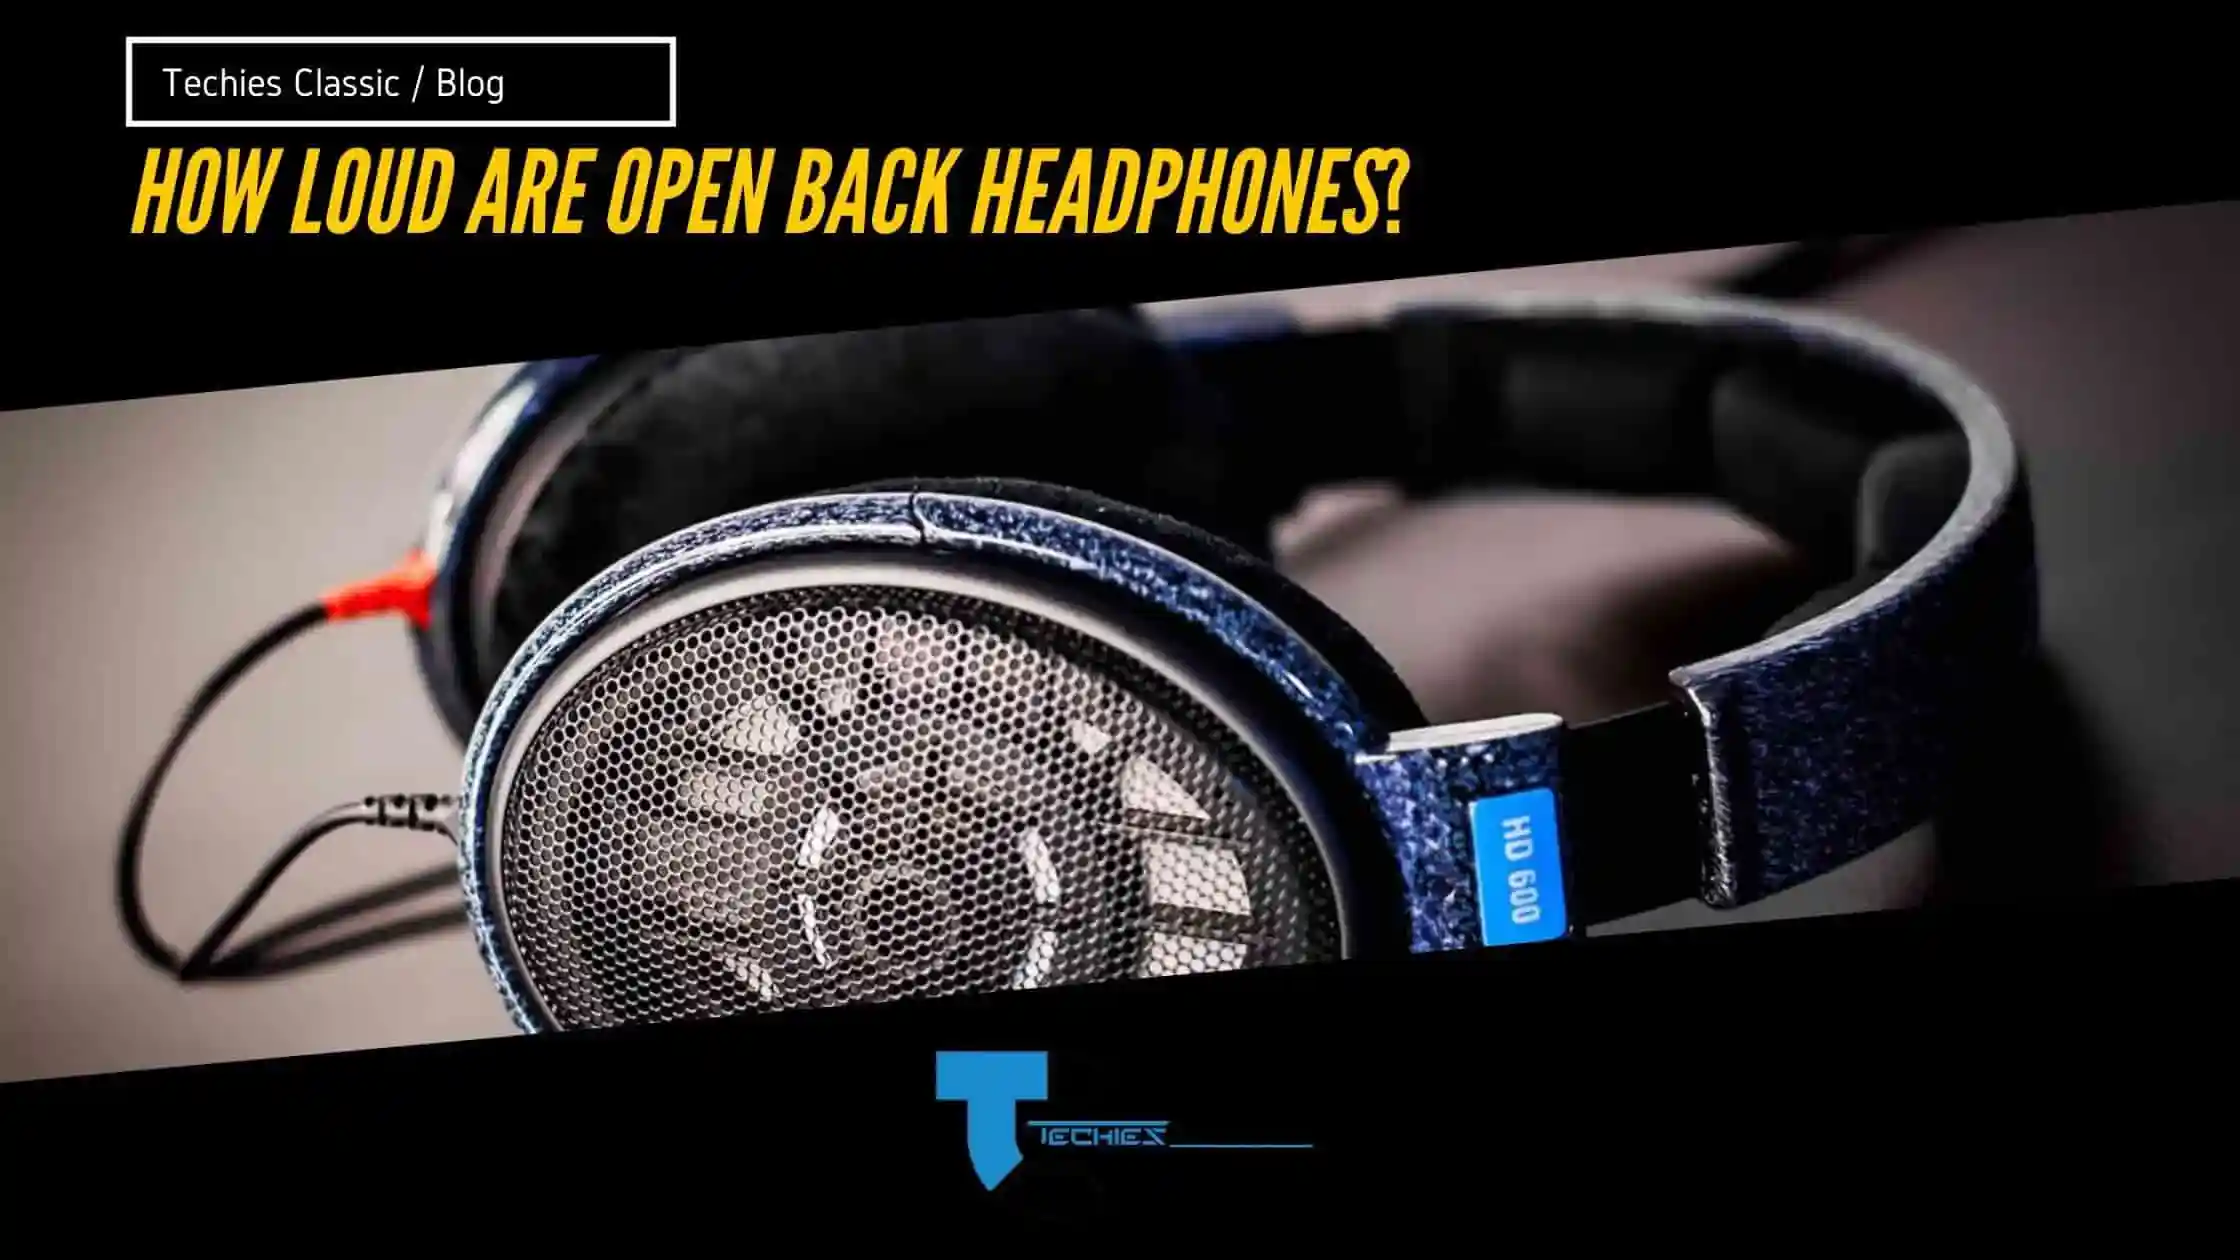 How loud are open back headphones?